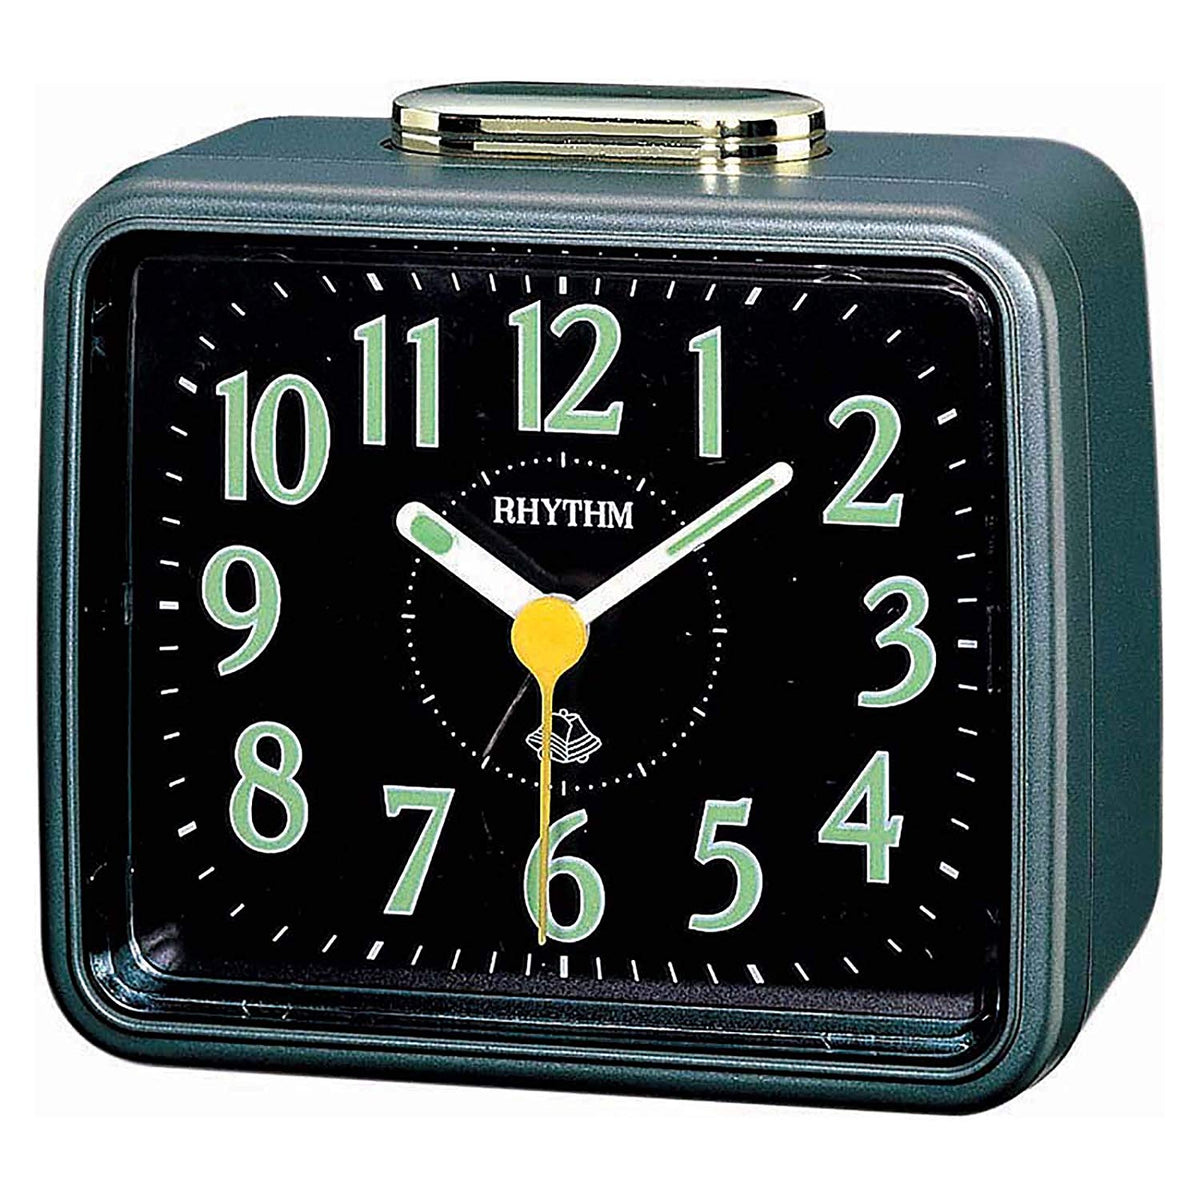 Rhythm Alarm Clock, With Bell Function, 4RA457WR08